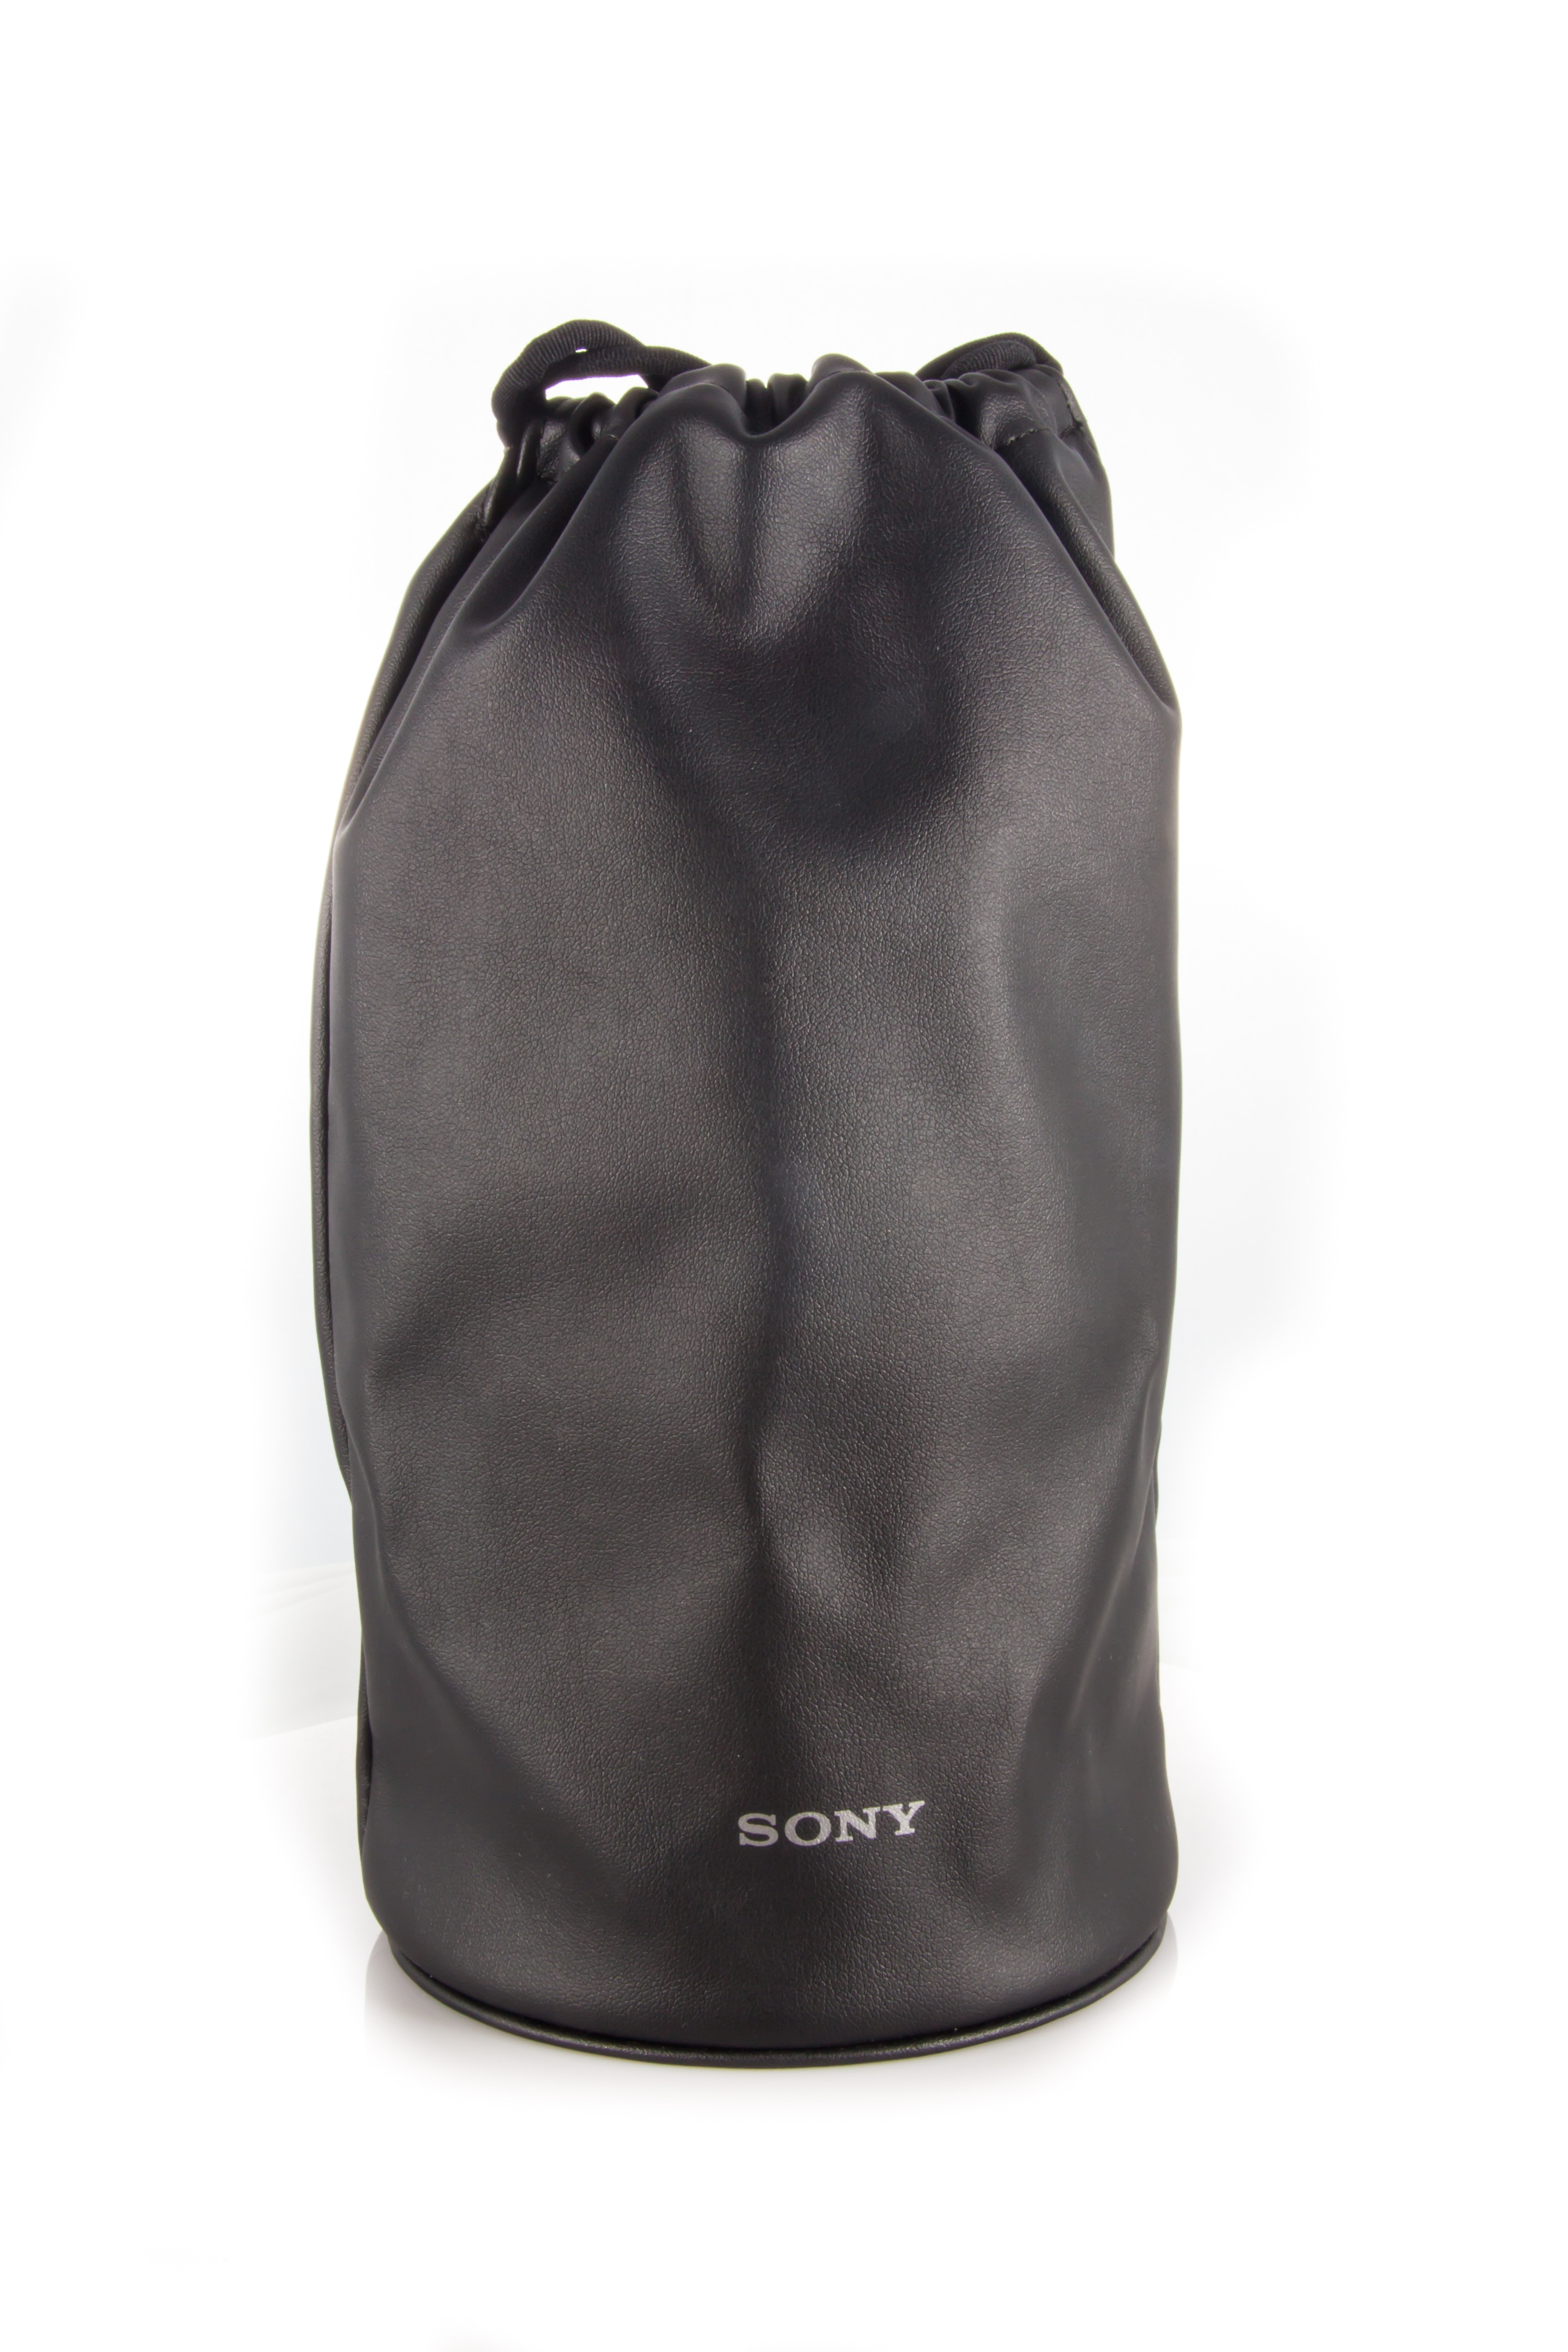 black leather sony drawstring bag